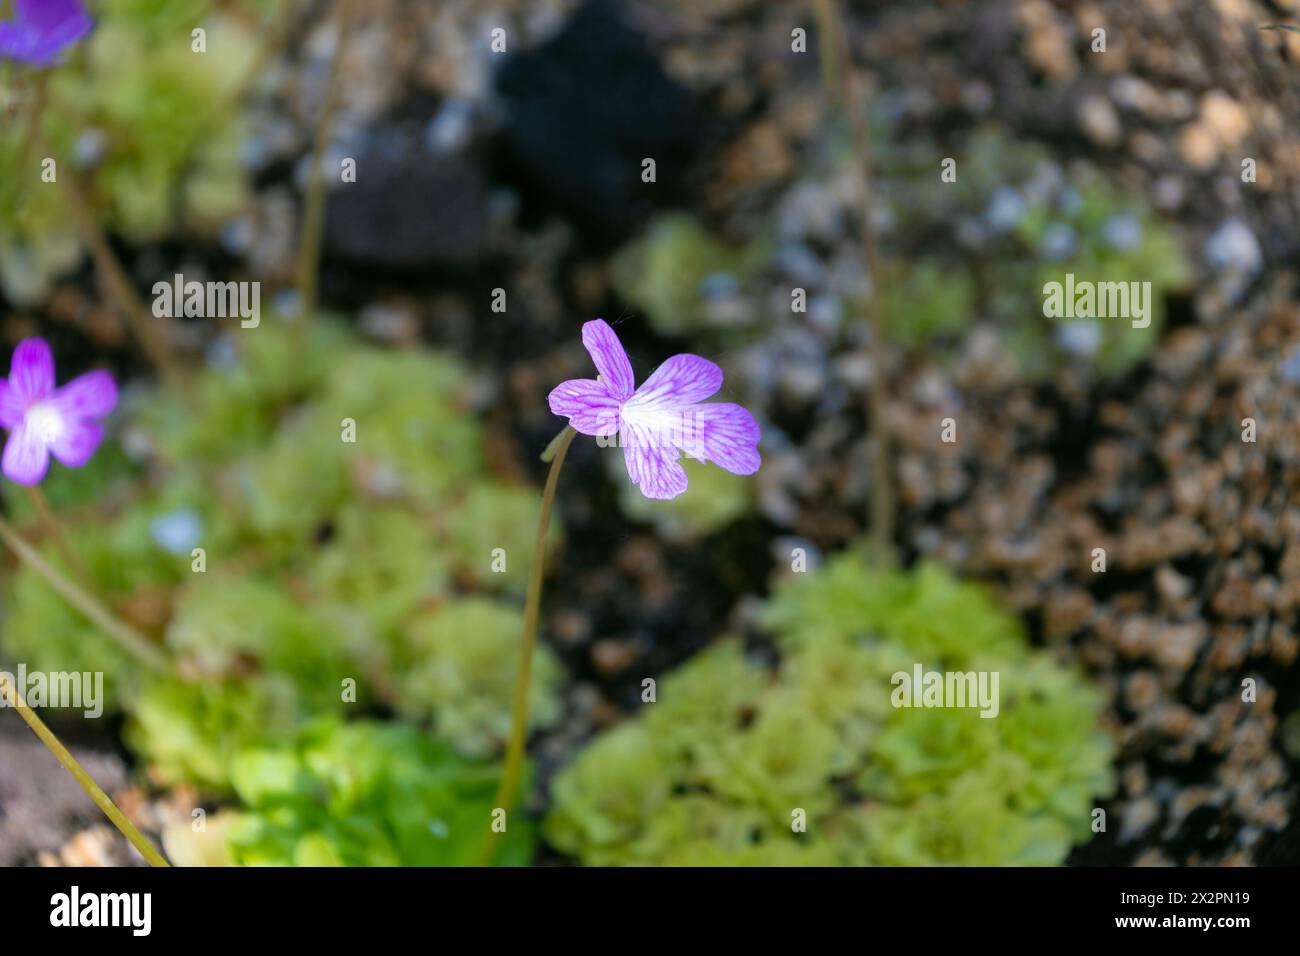 Small purple flower of Pinguicula moranensis. insectivorous herb. flowering plant family Lentibulariaceae. Stock Photo